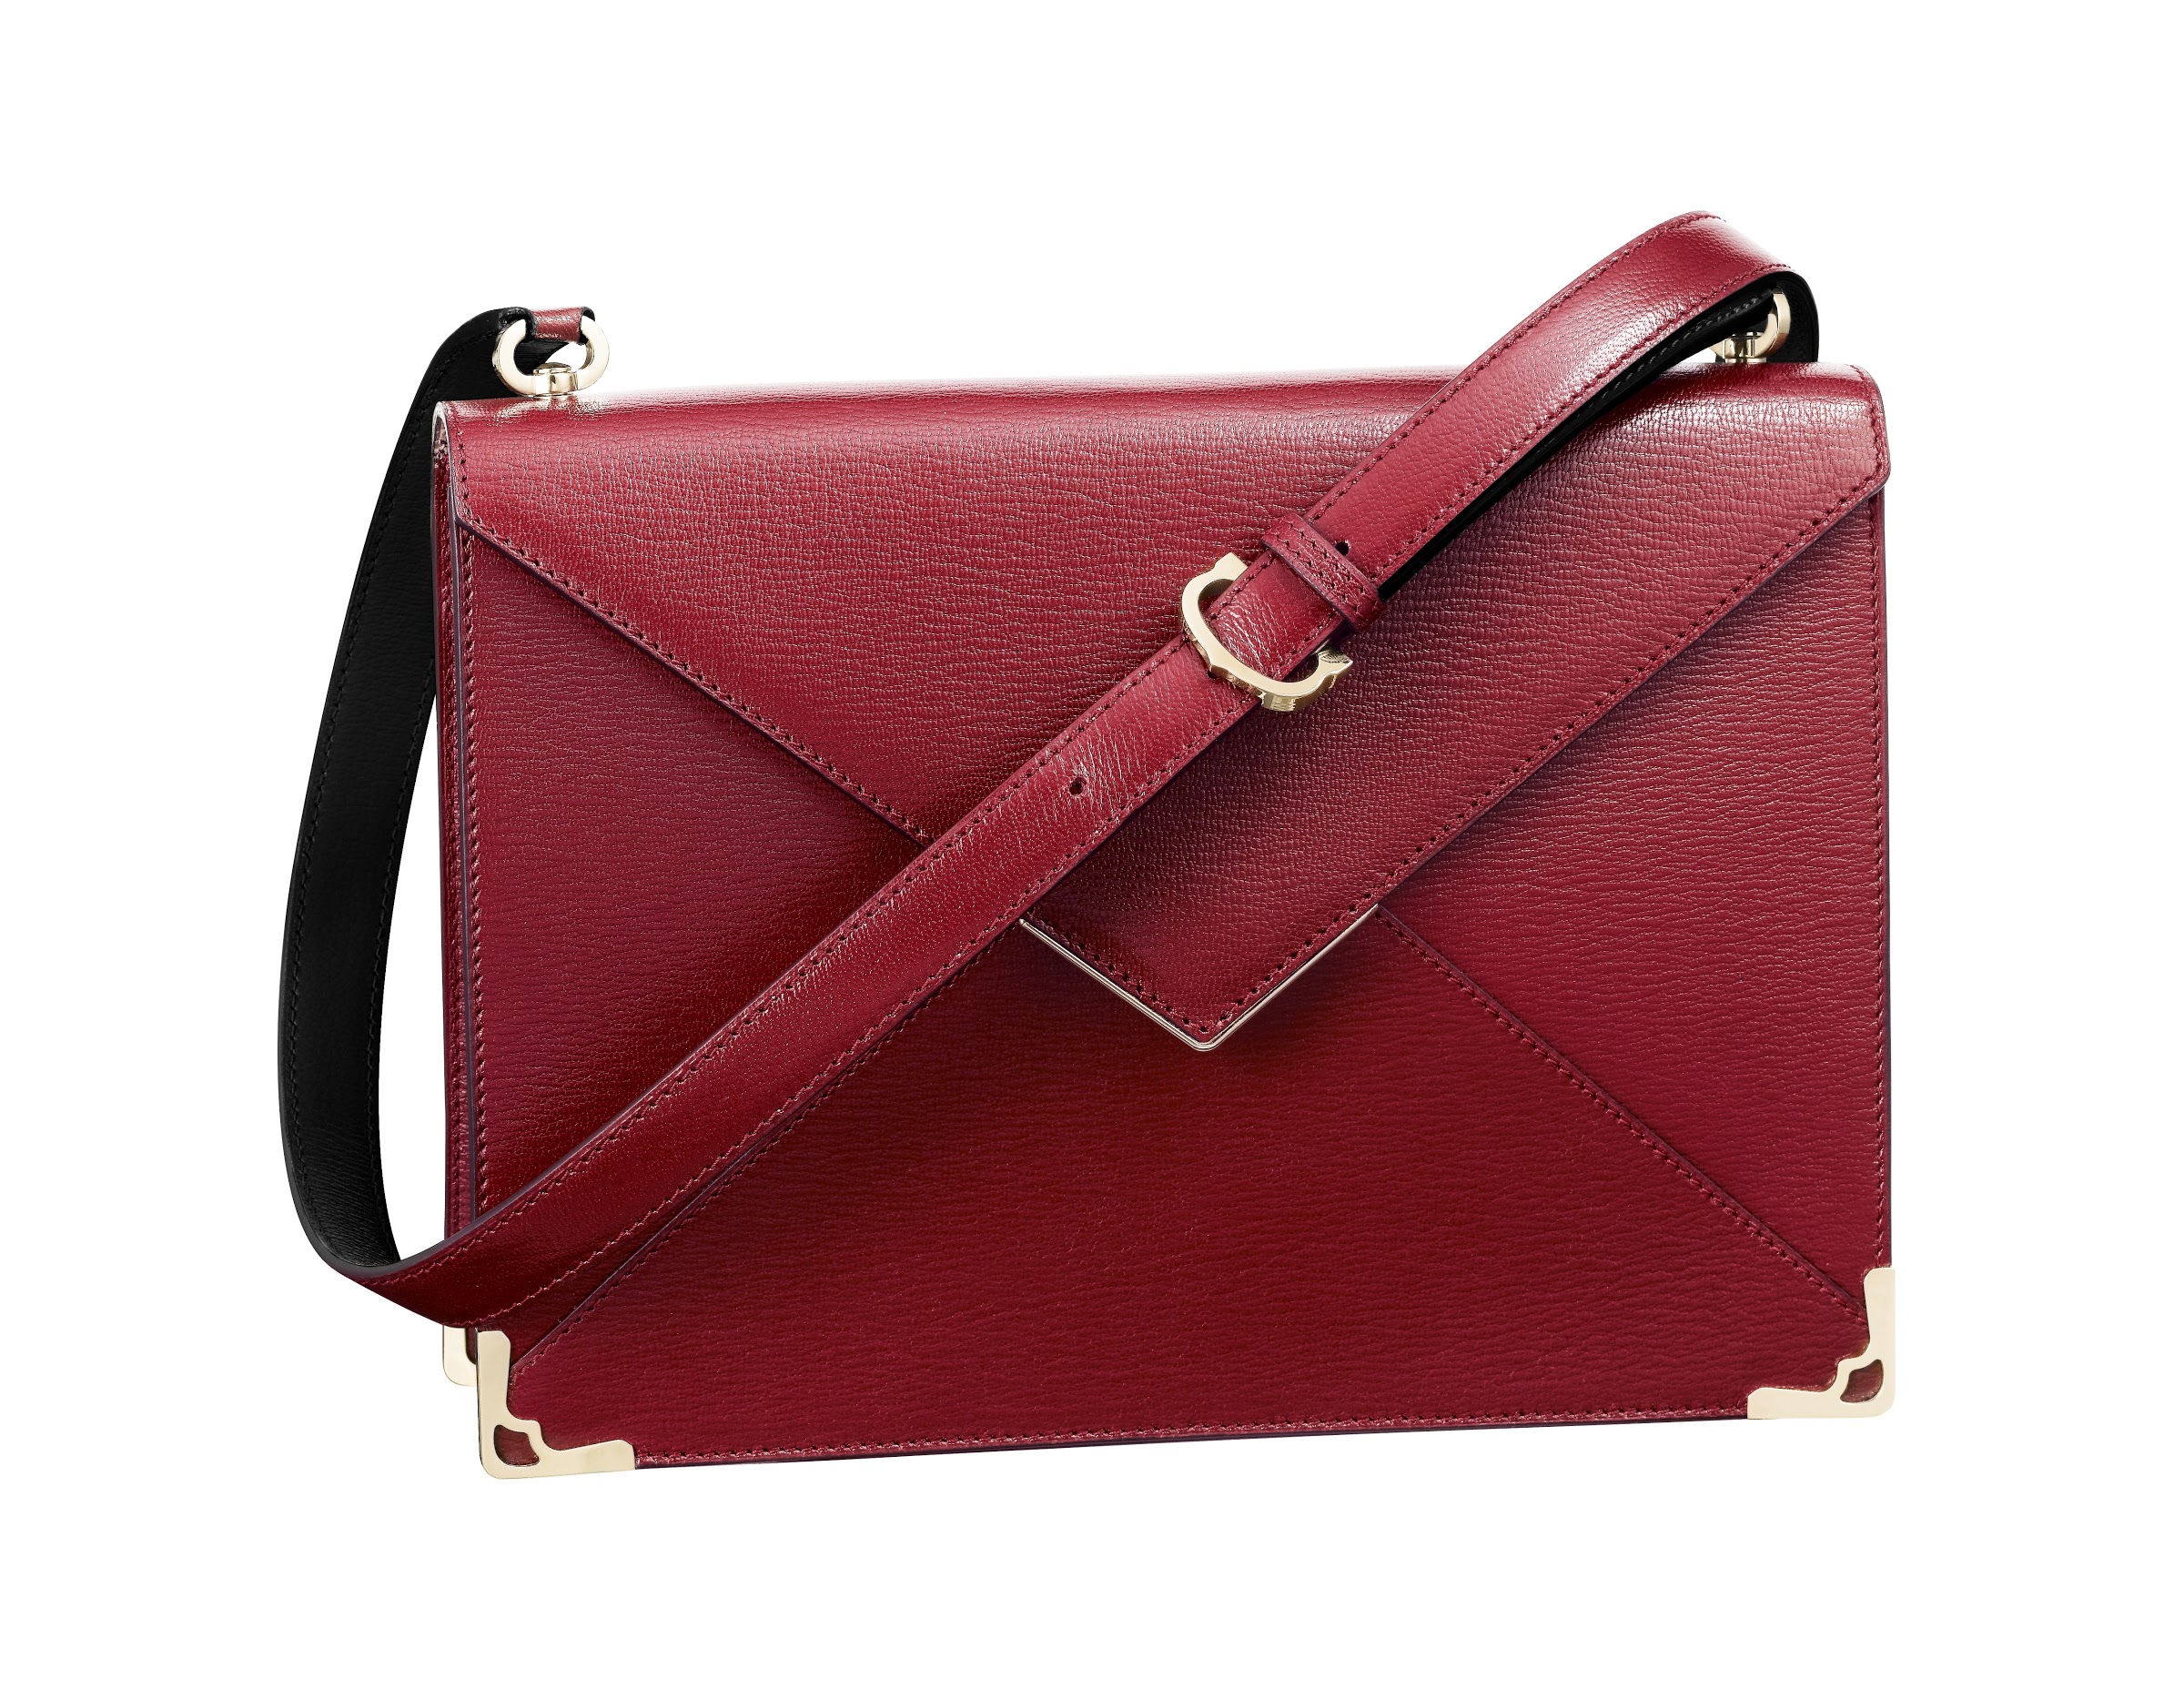 Cartier's New Envelope Bag 